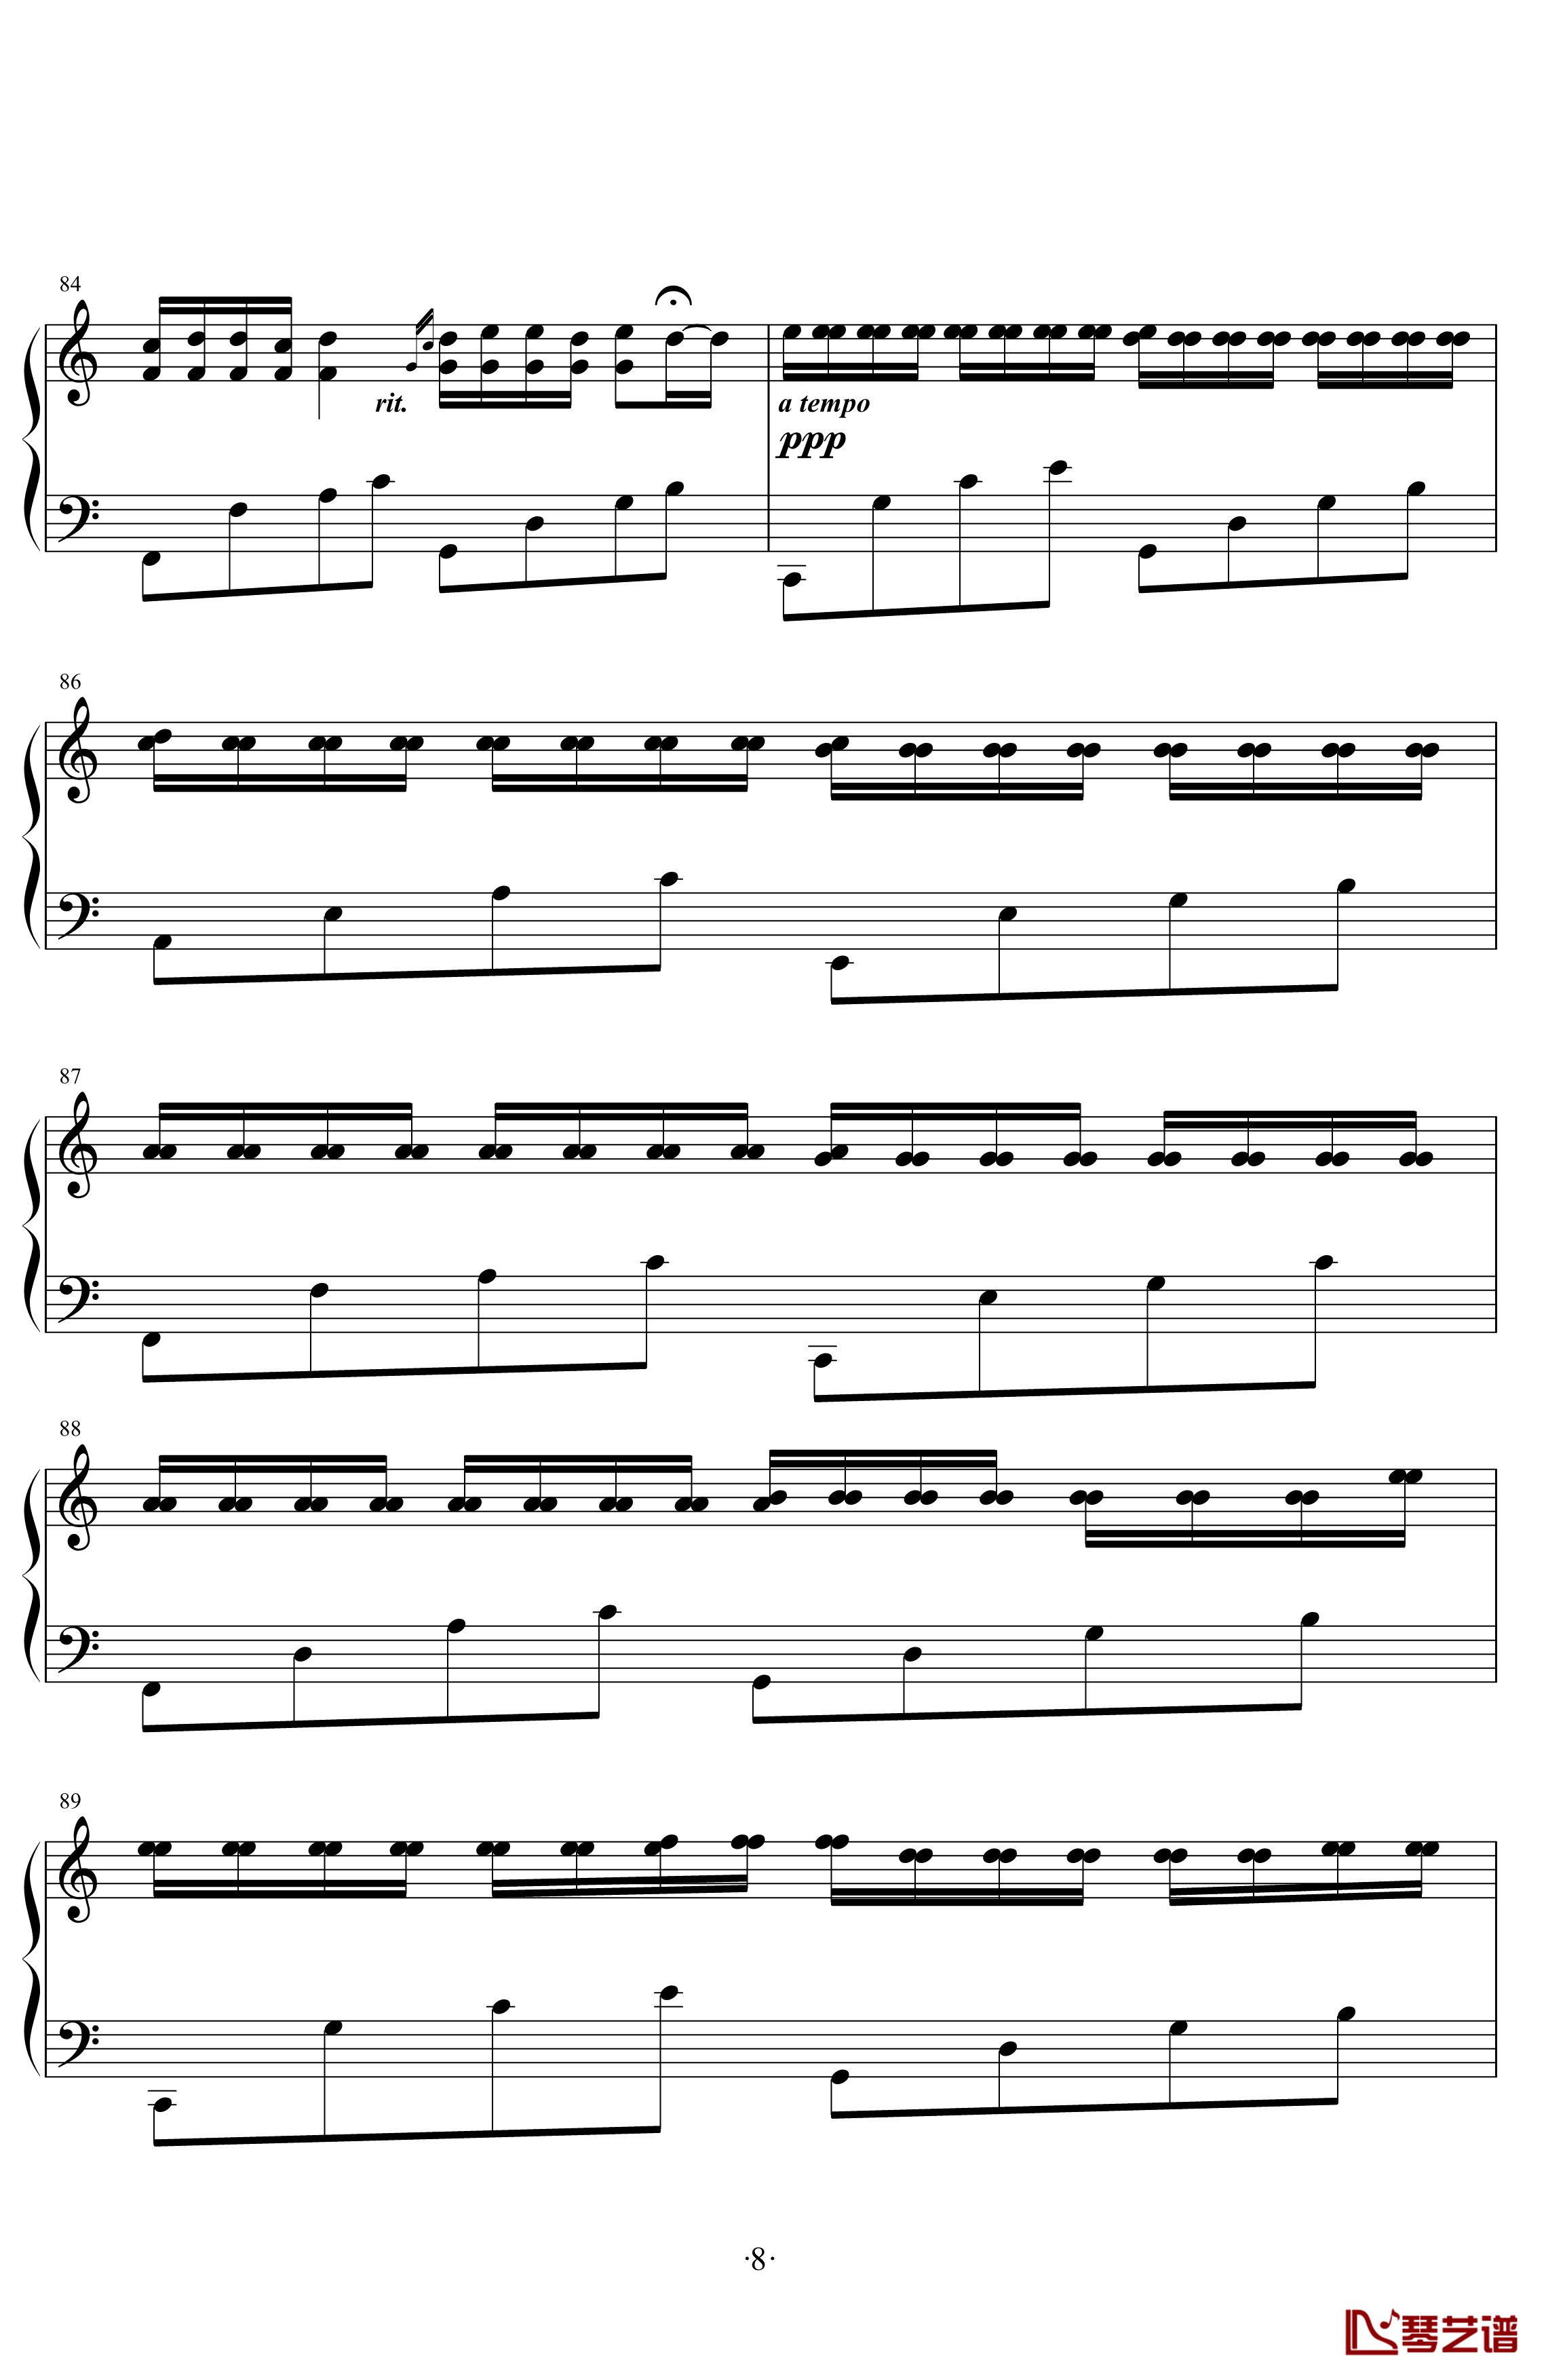 卡农变奏曲钢琴谱-Variations on the Canon by Pachelbel V.L.最终定本-George Winston8